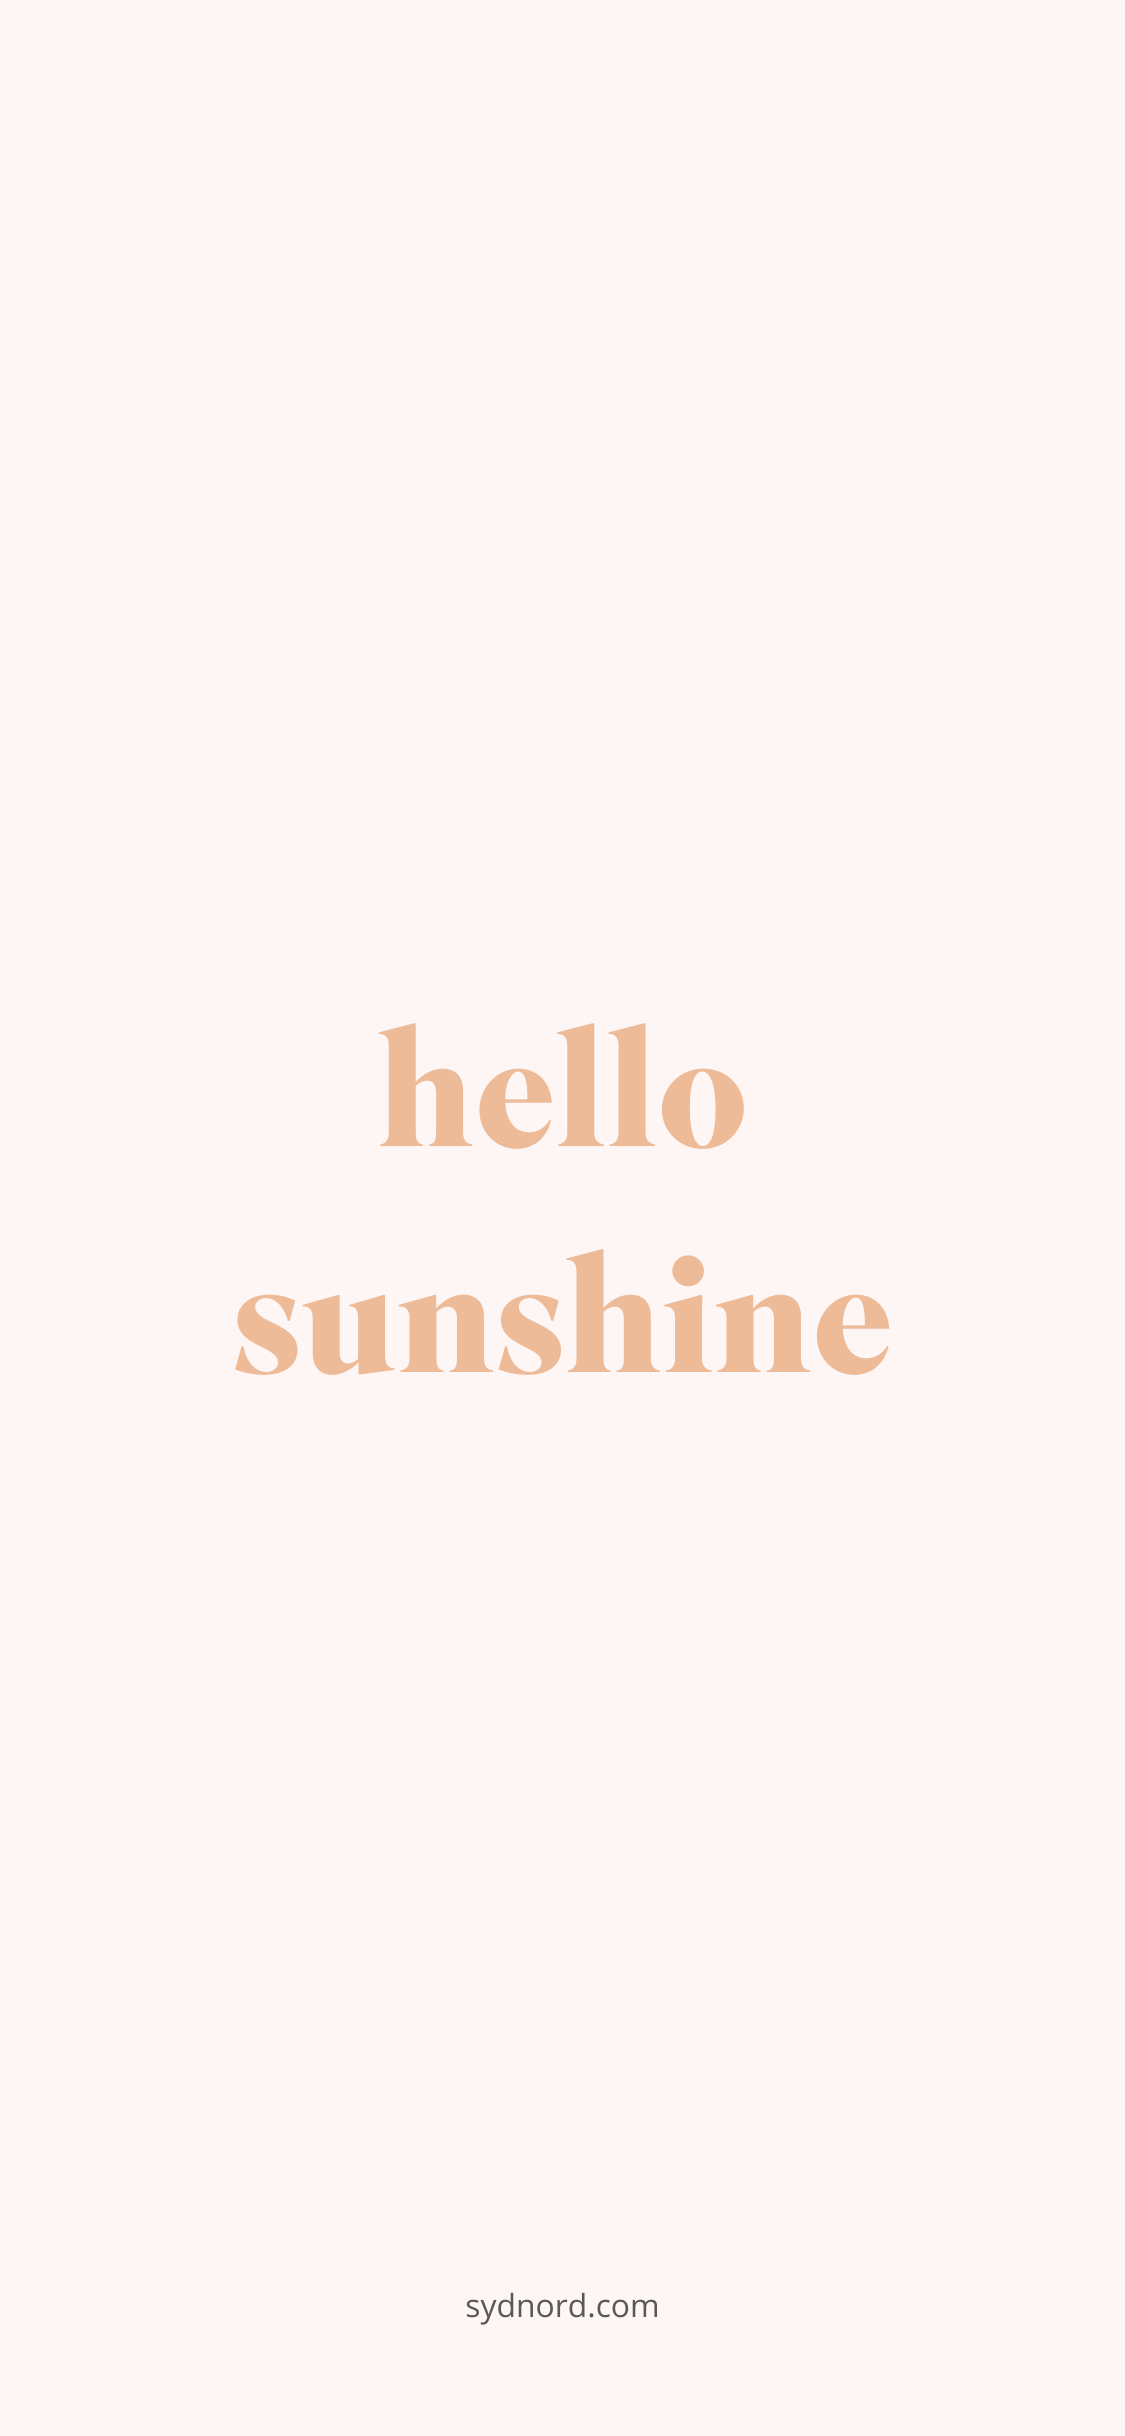 Simple positive quotes: Hello sunshine